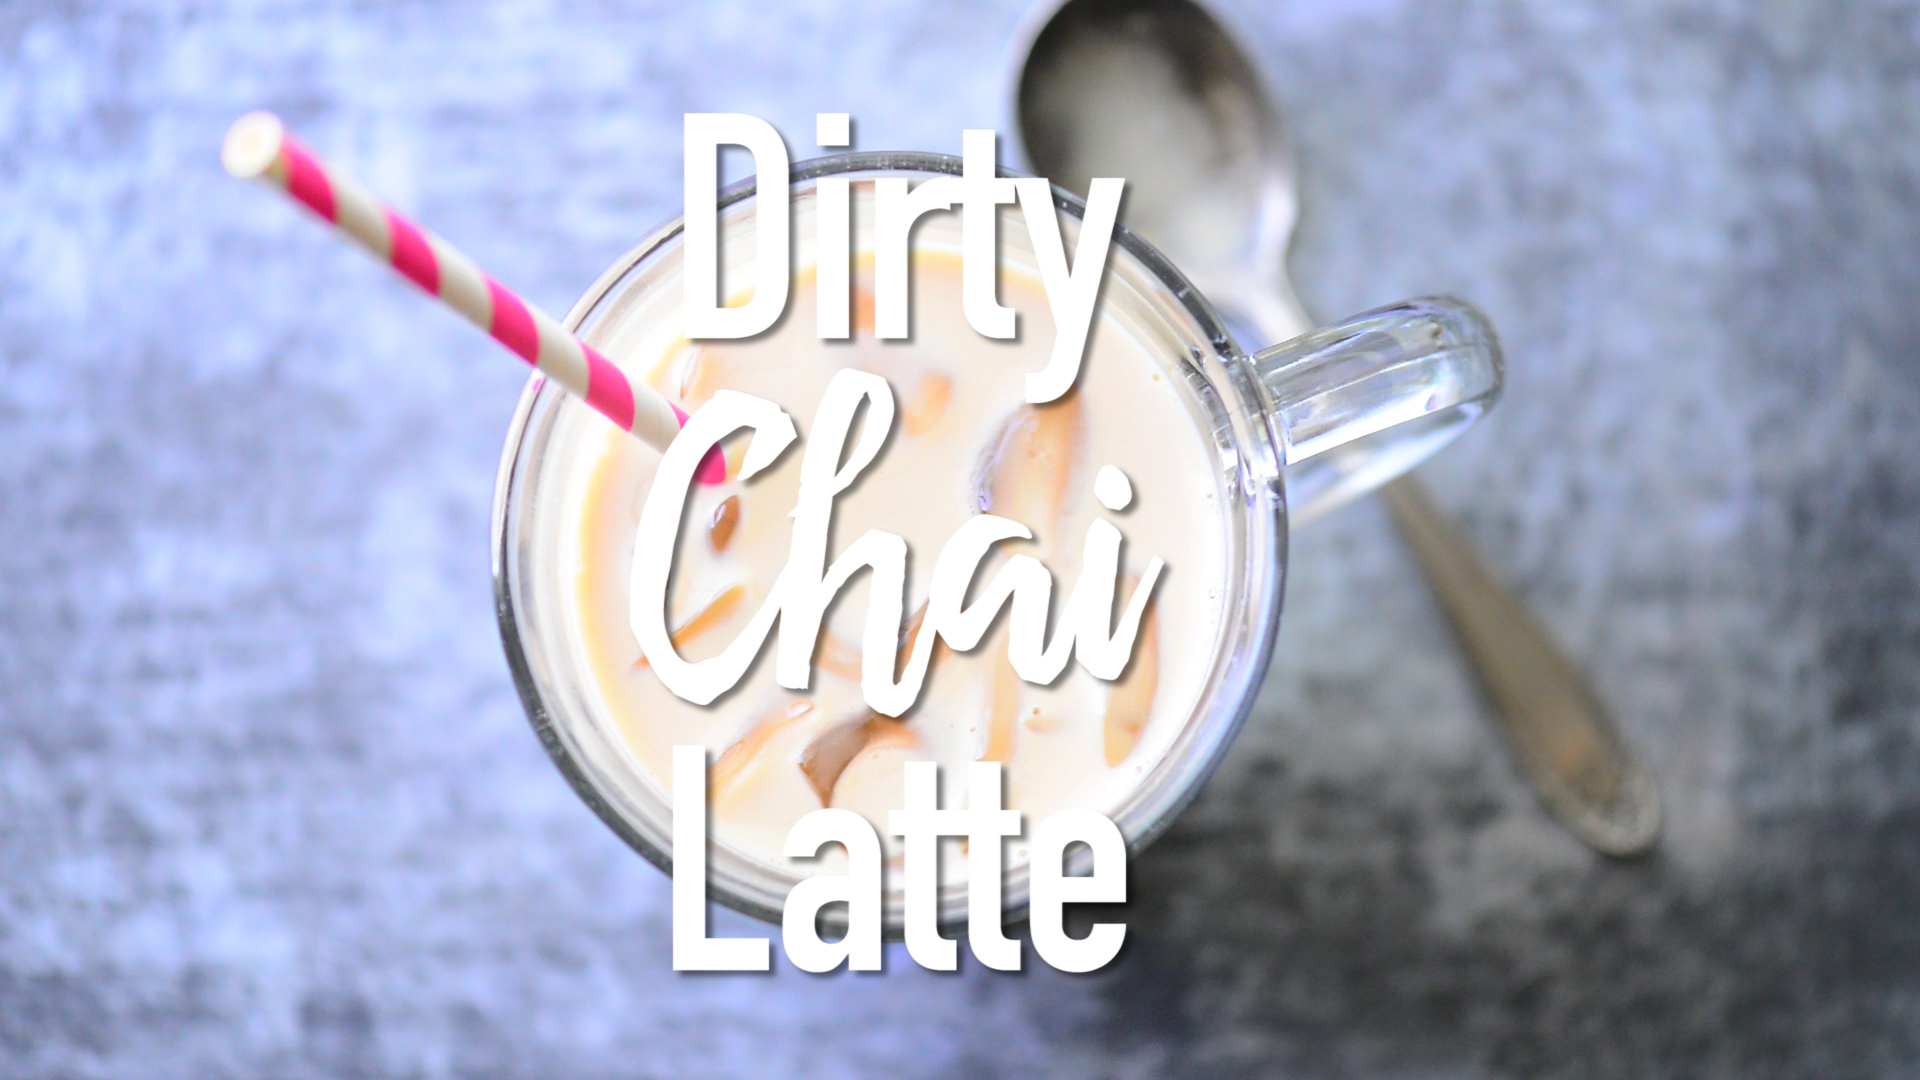 Dirty Chai Latte – Stash Tea